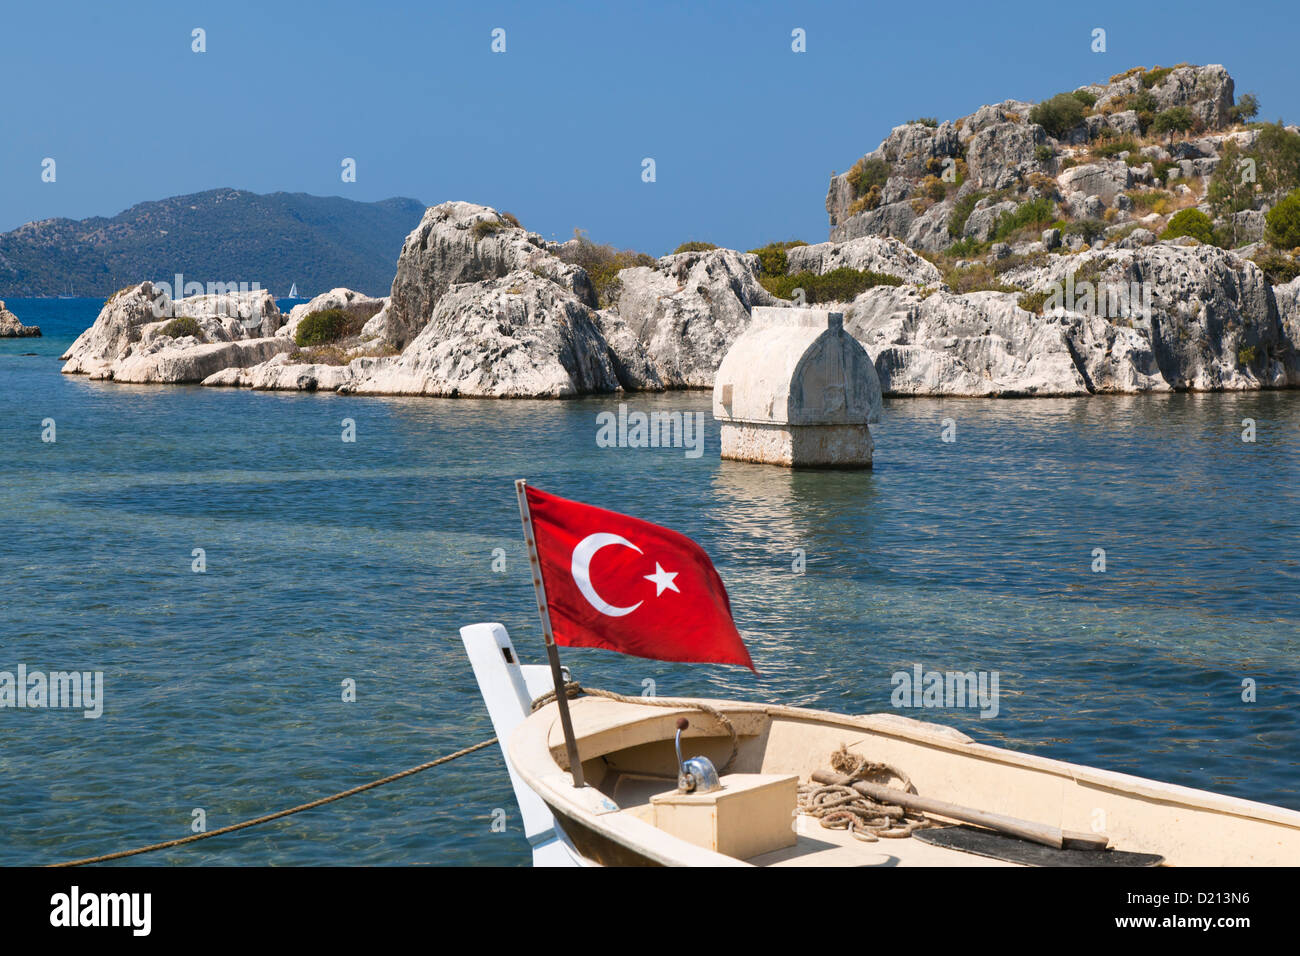 Barca con bandiera turca, sarcofago, Simena, Kalekoy, lycian coast, Mare mediterraneo, Turchia Foto Stock